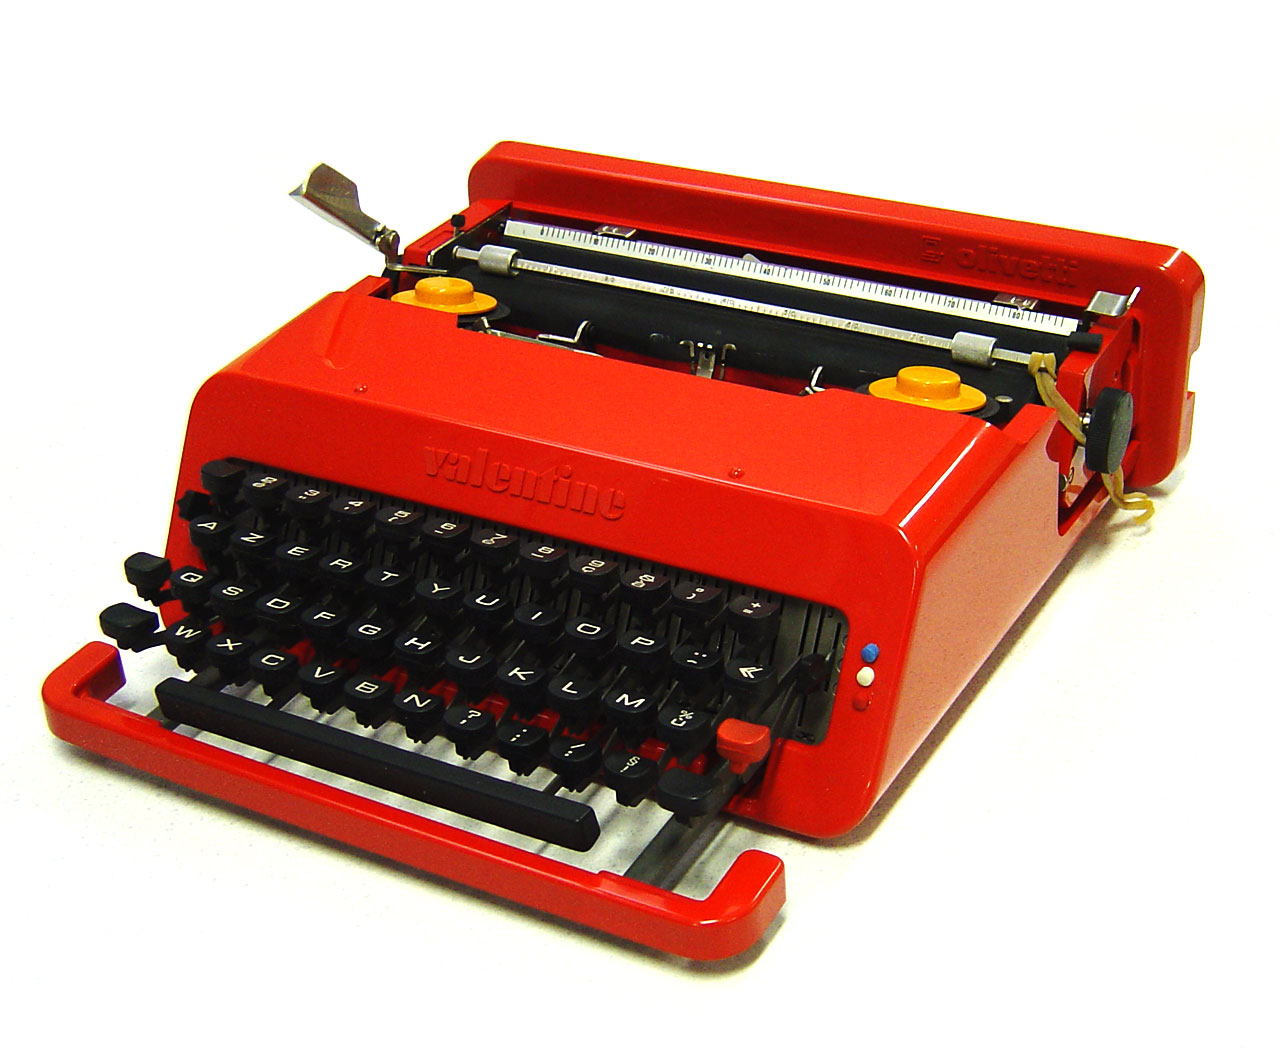 the-point-of-view:

Olivetti Valentine typewriter